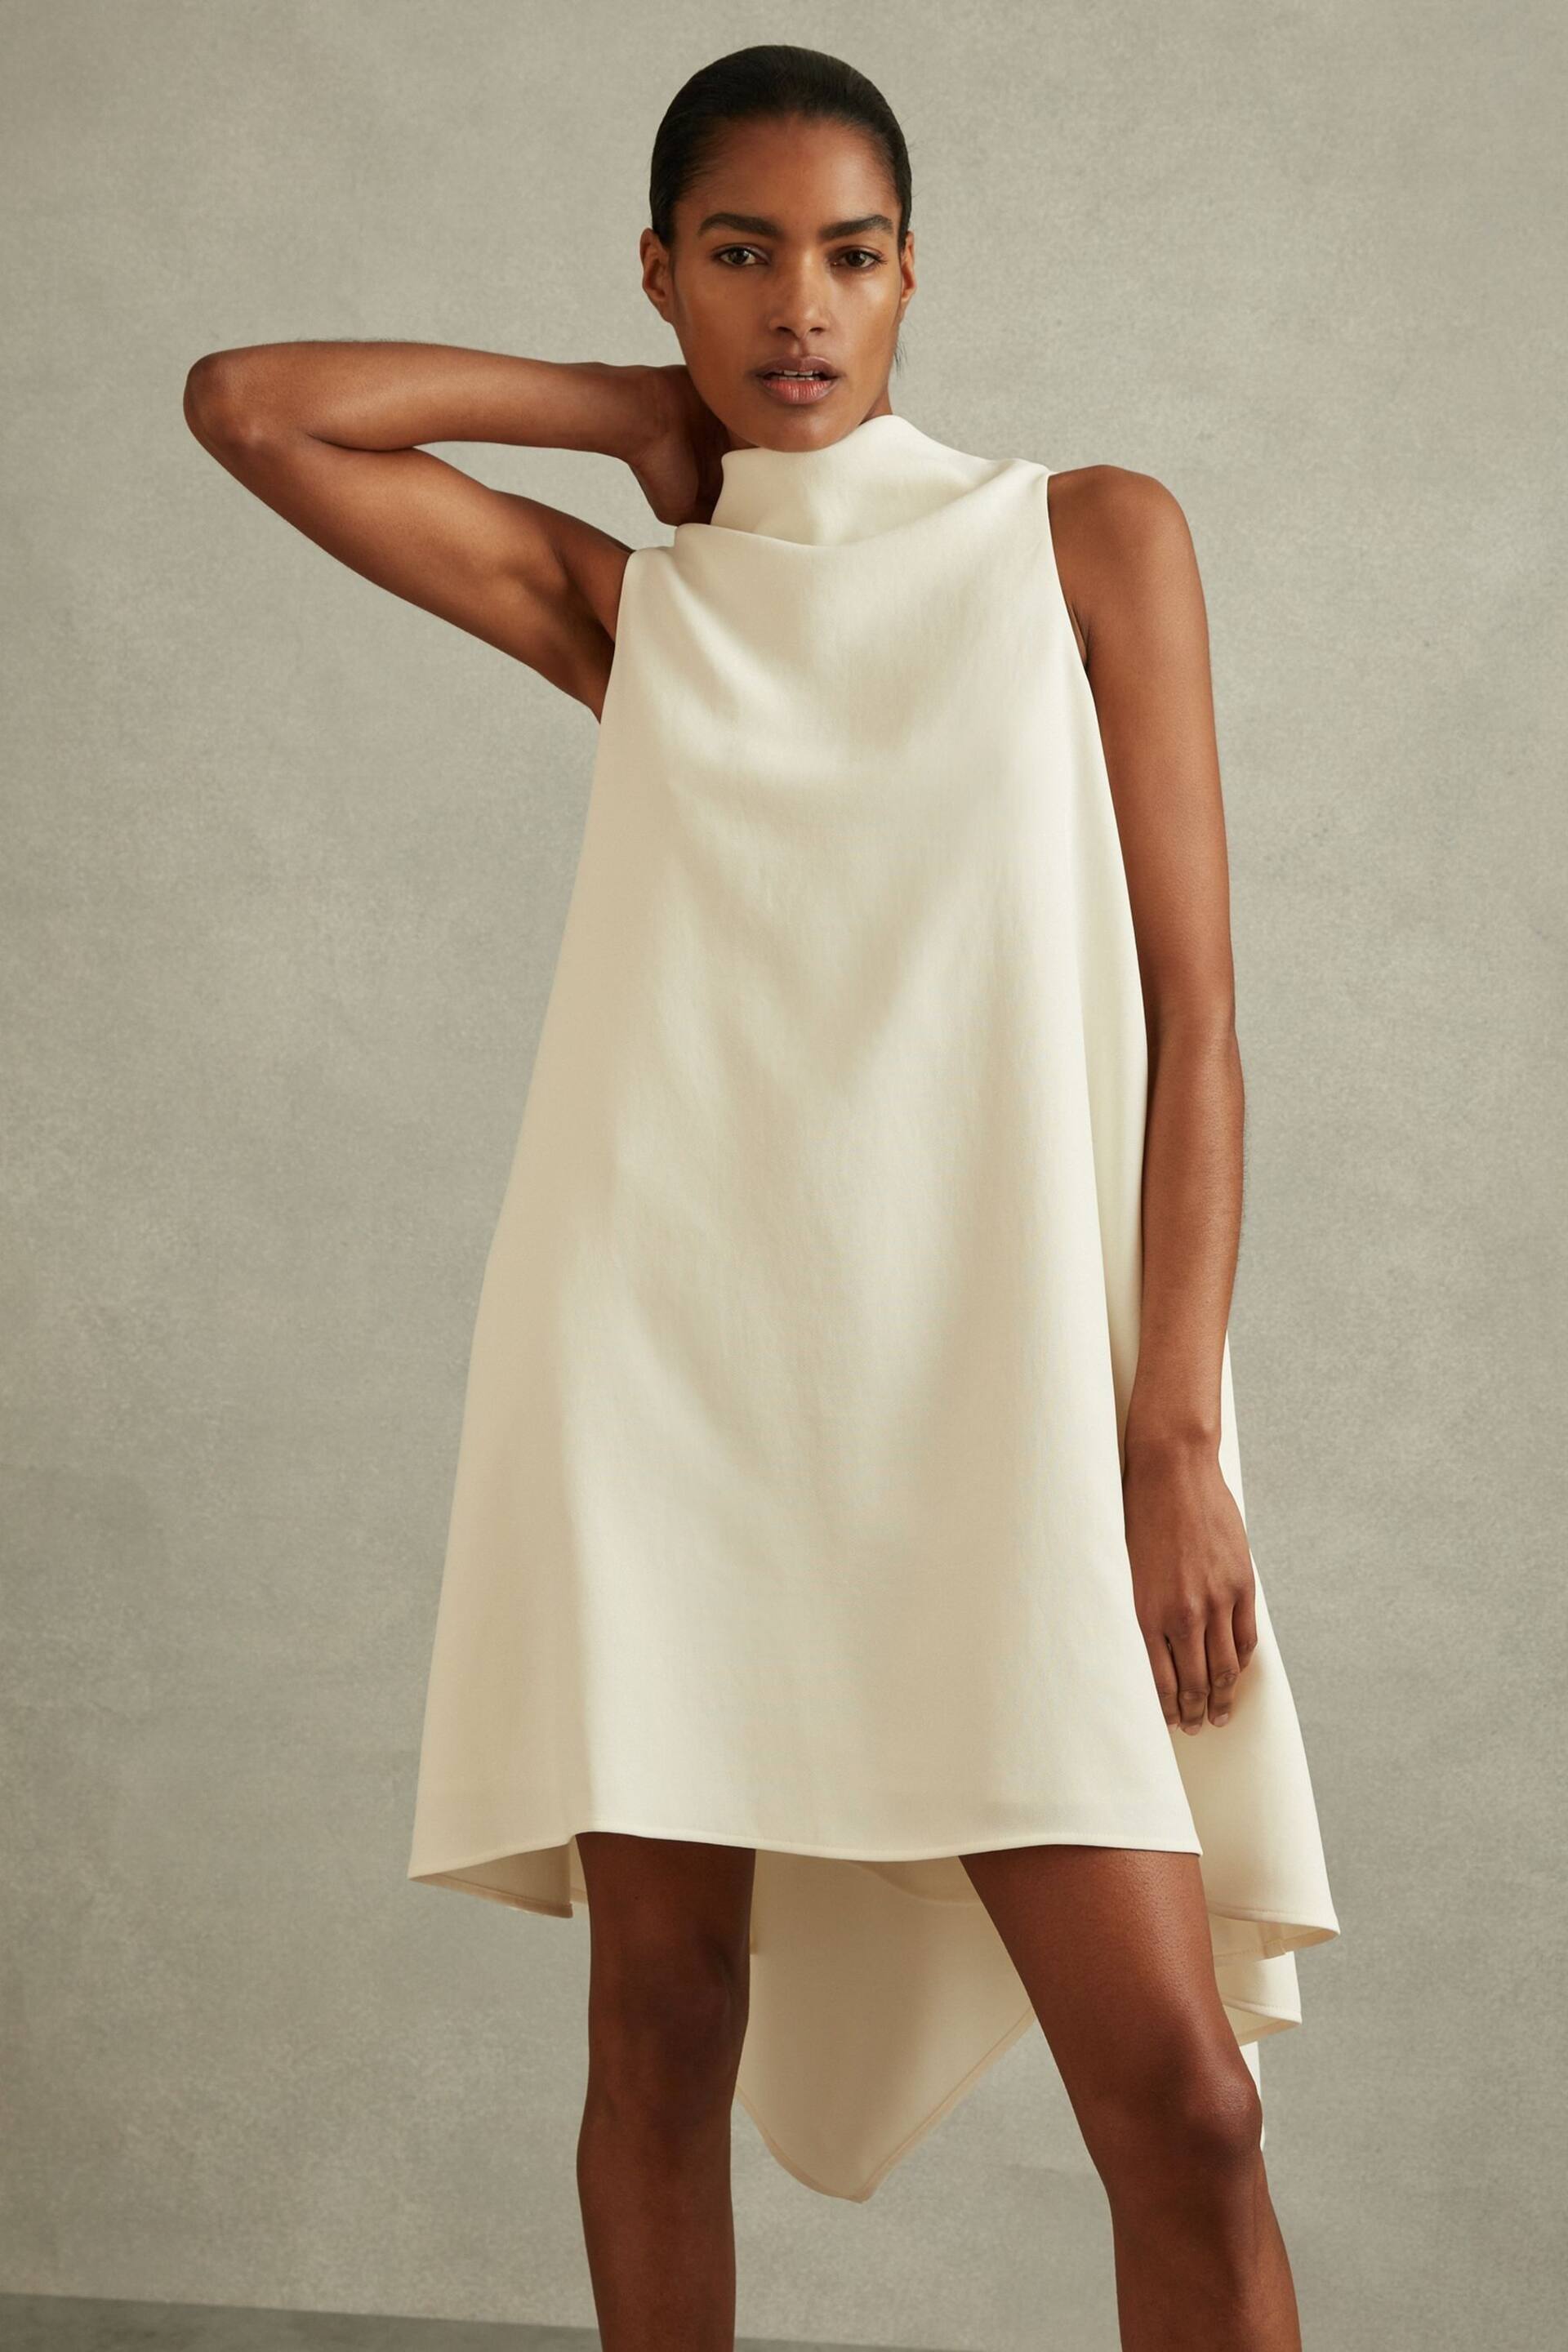 Reiss Ivory Shauna High-Neck Drape Back Mini Dress - Image 3 of 6